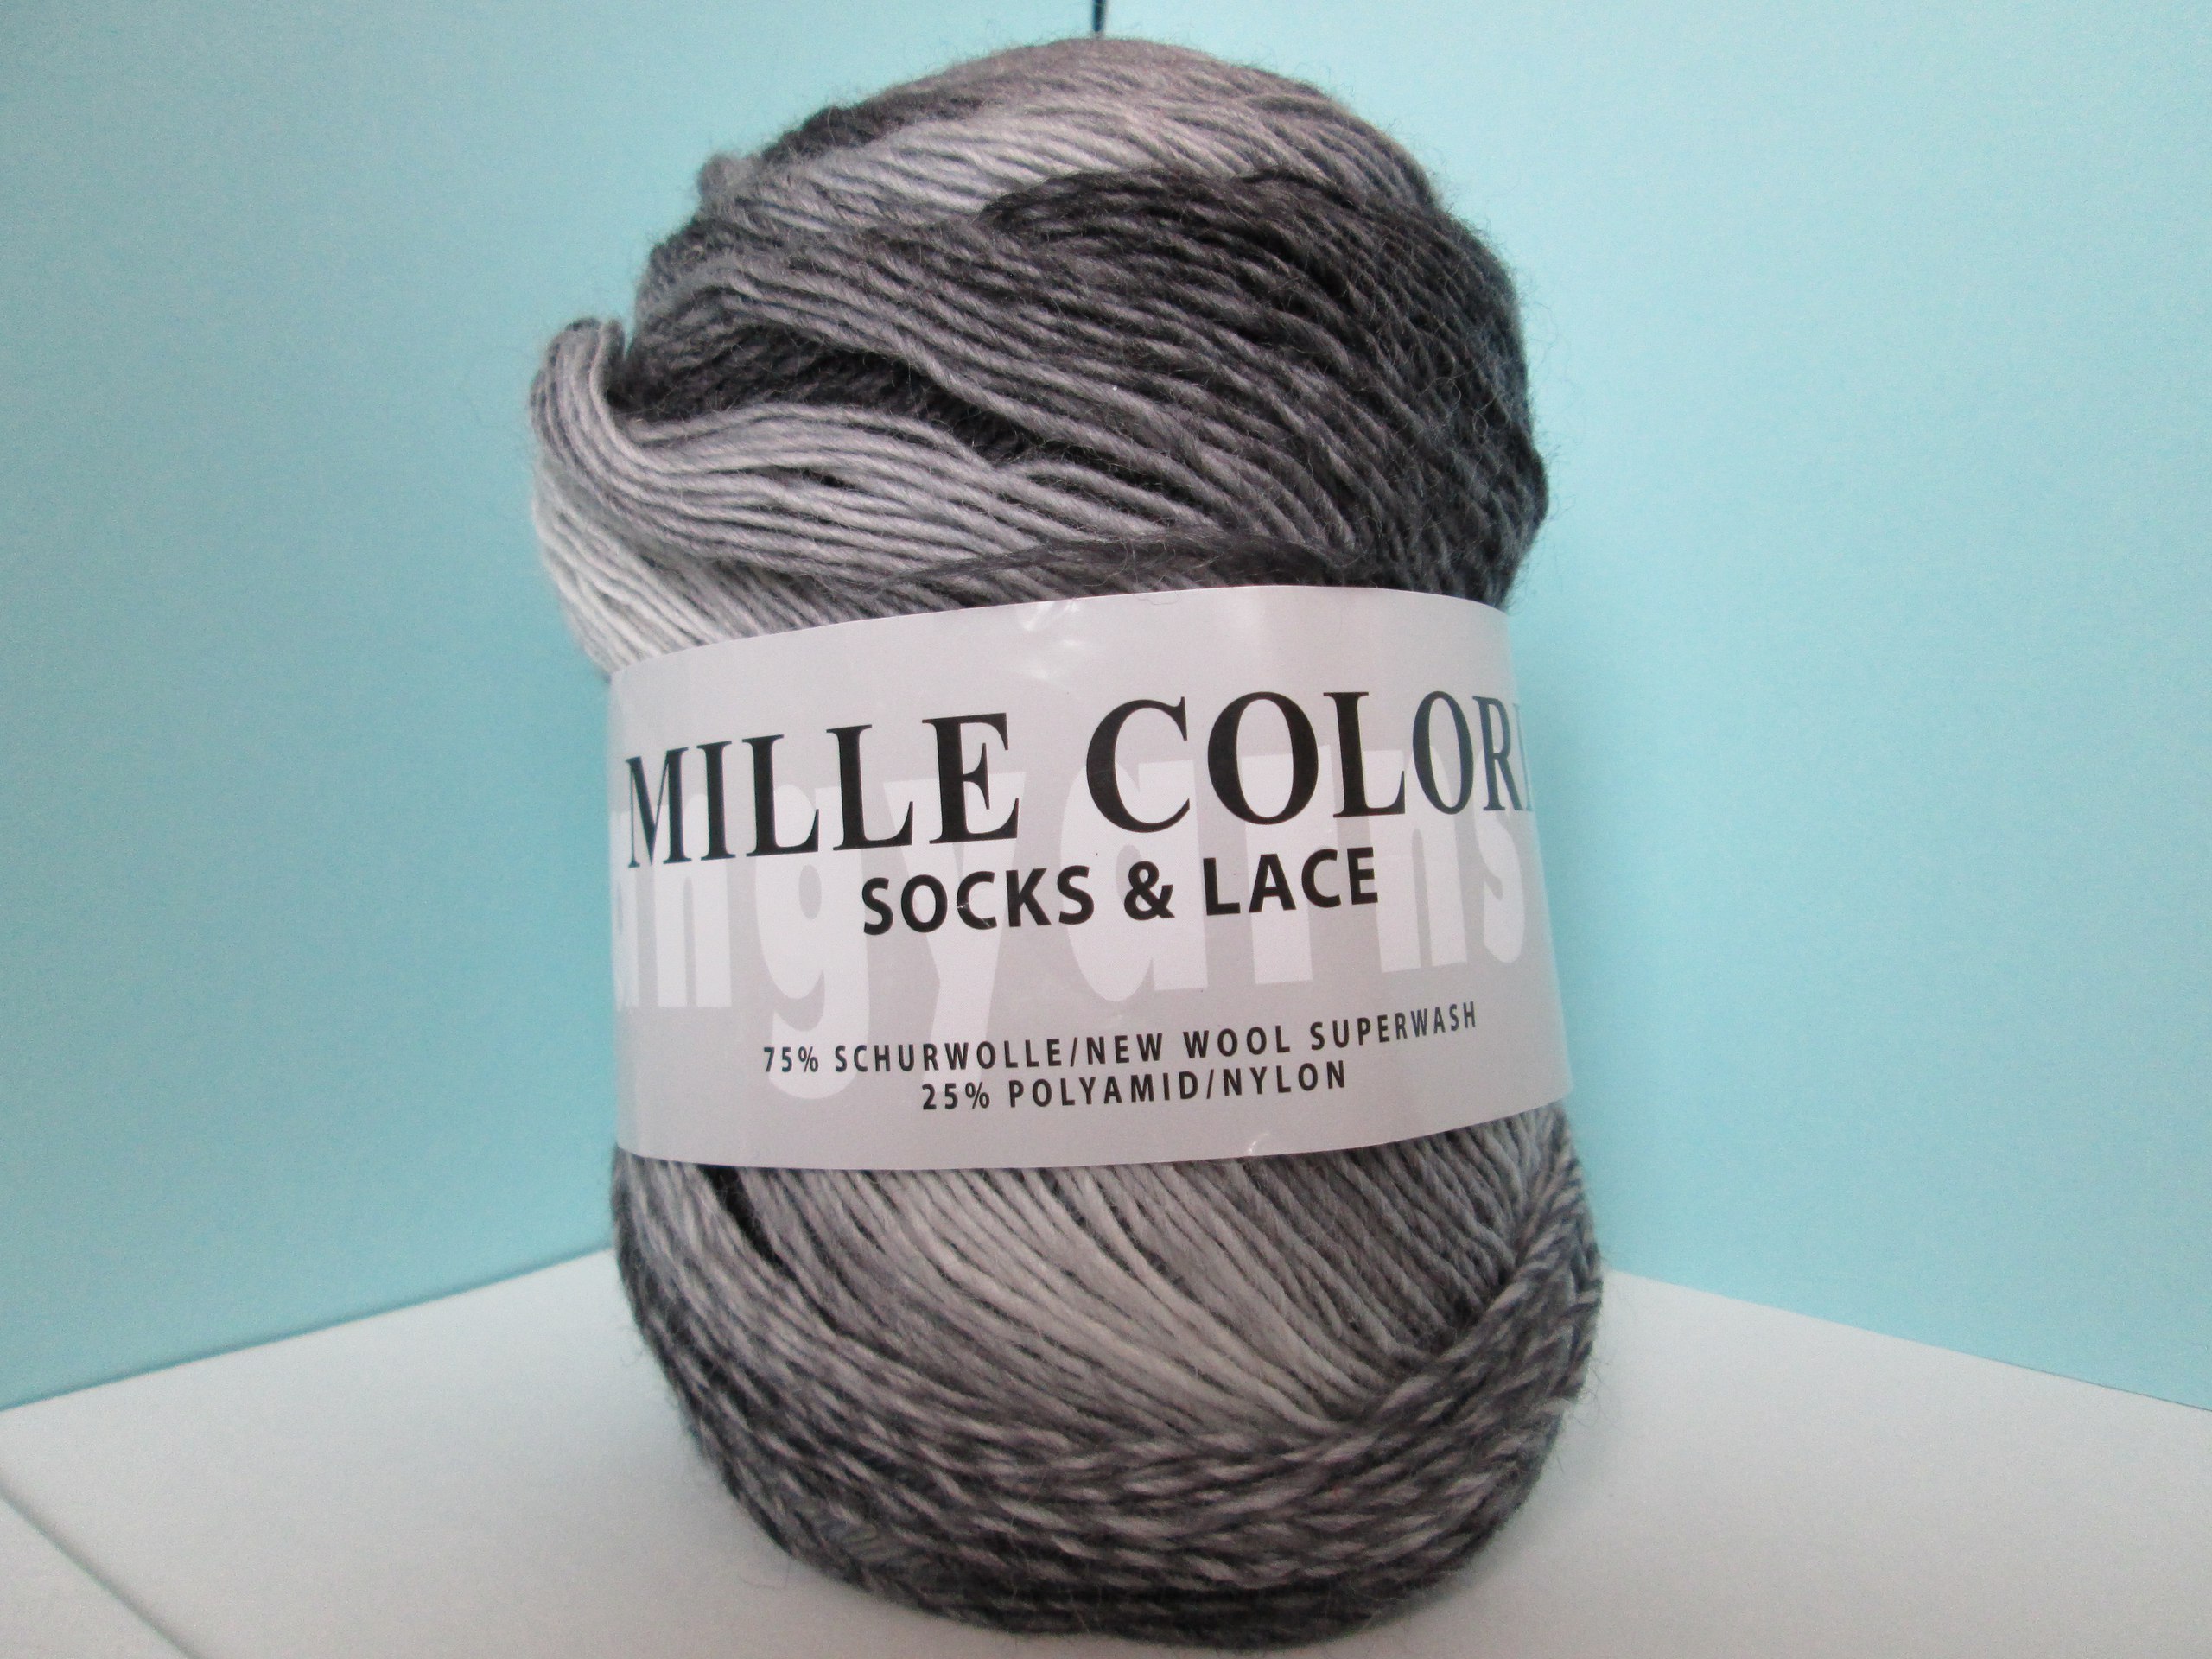 Отзыв о пряже для вязания носков Mille Colori Socks & Lace от производителя Lang Yarns